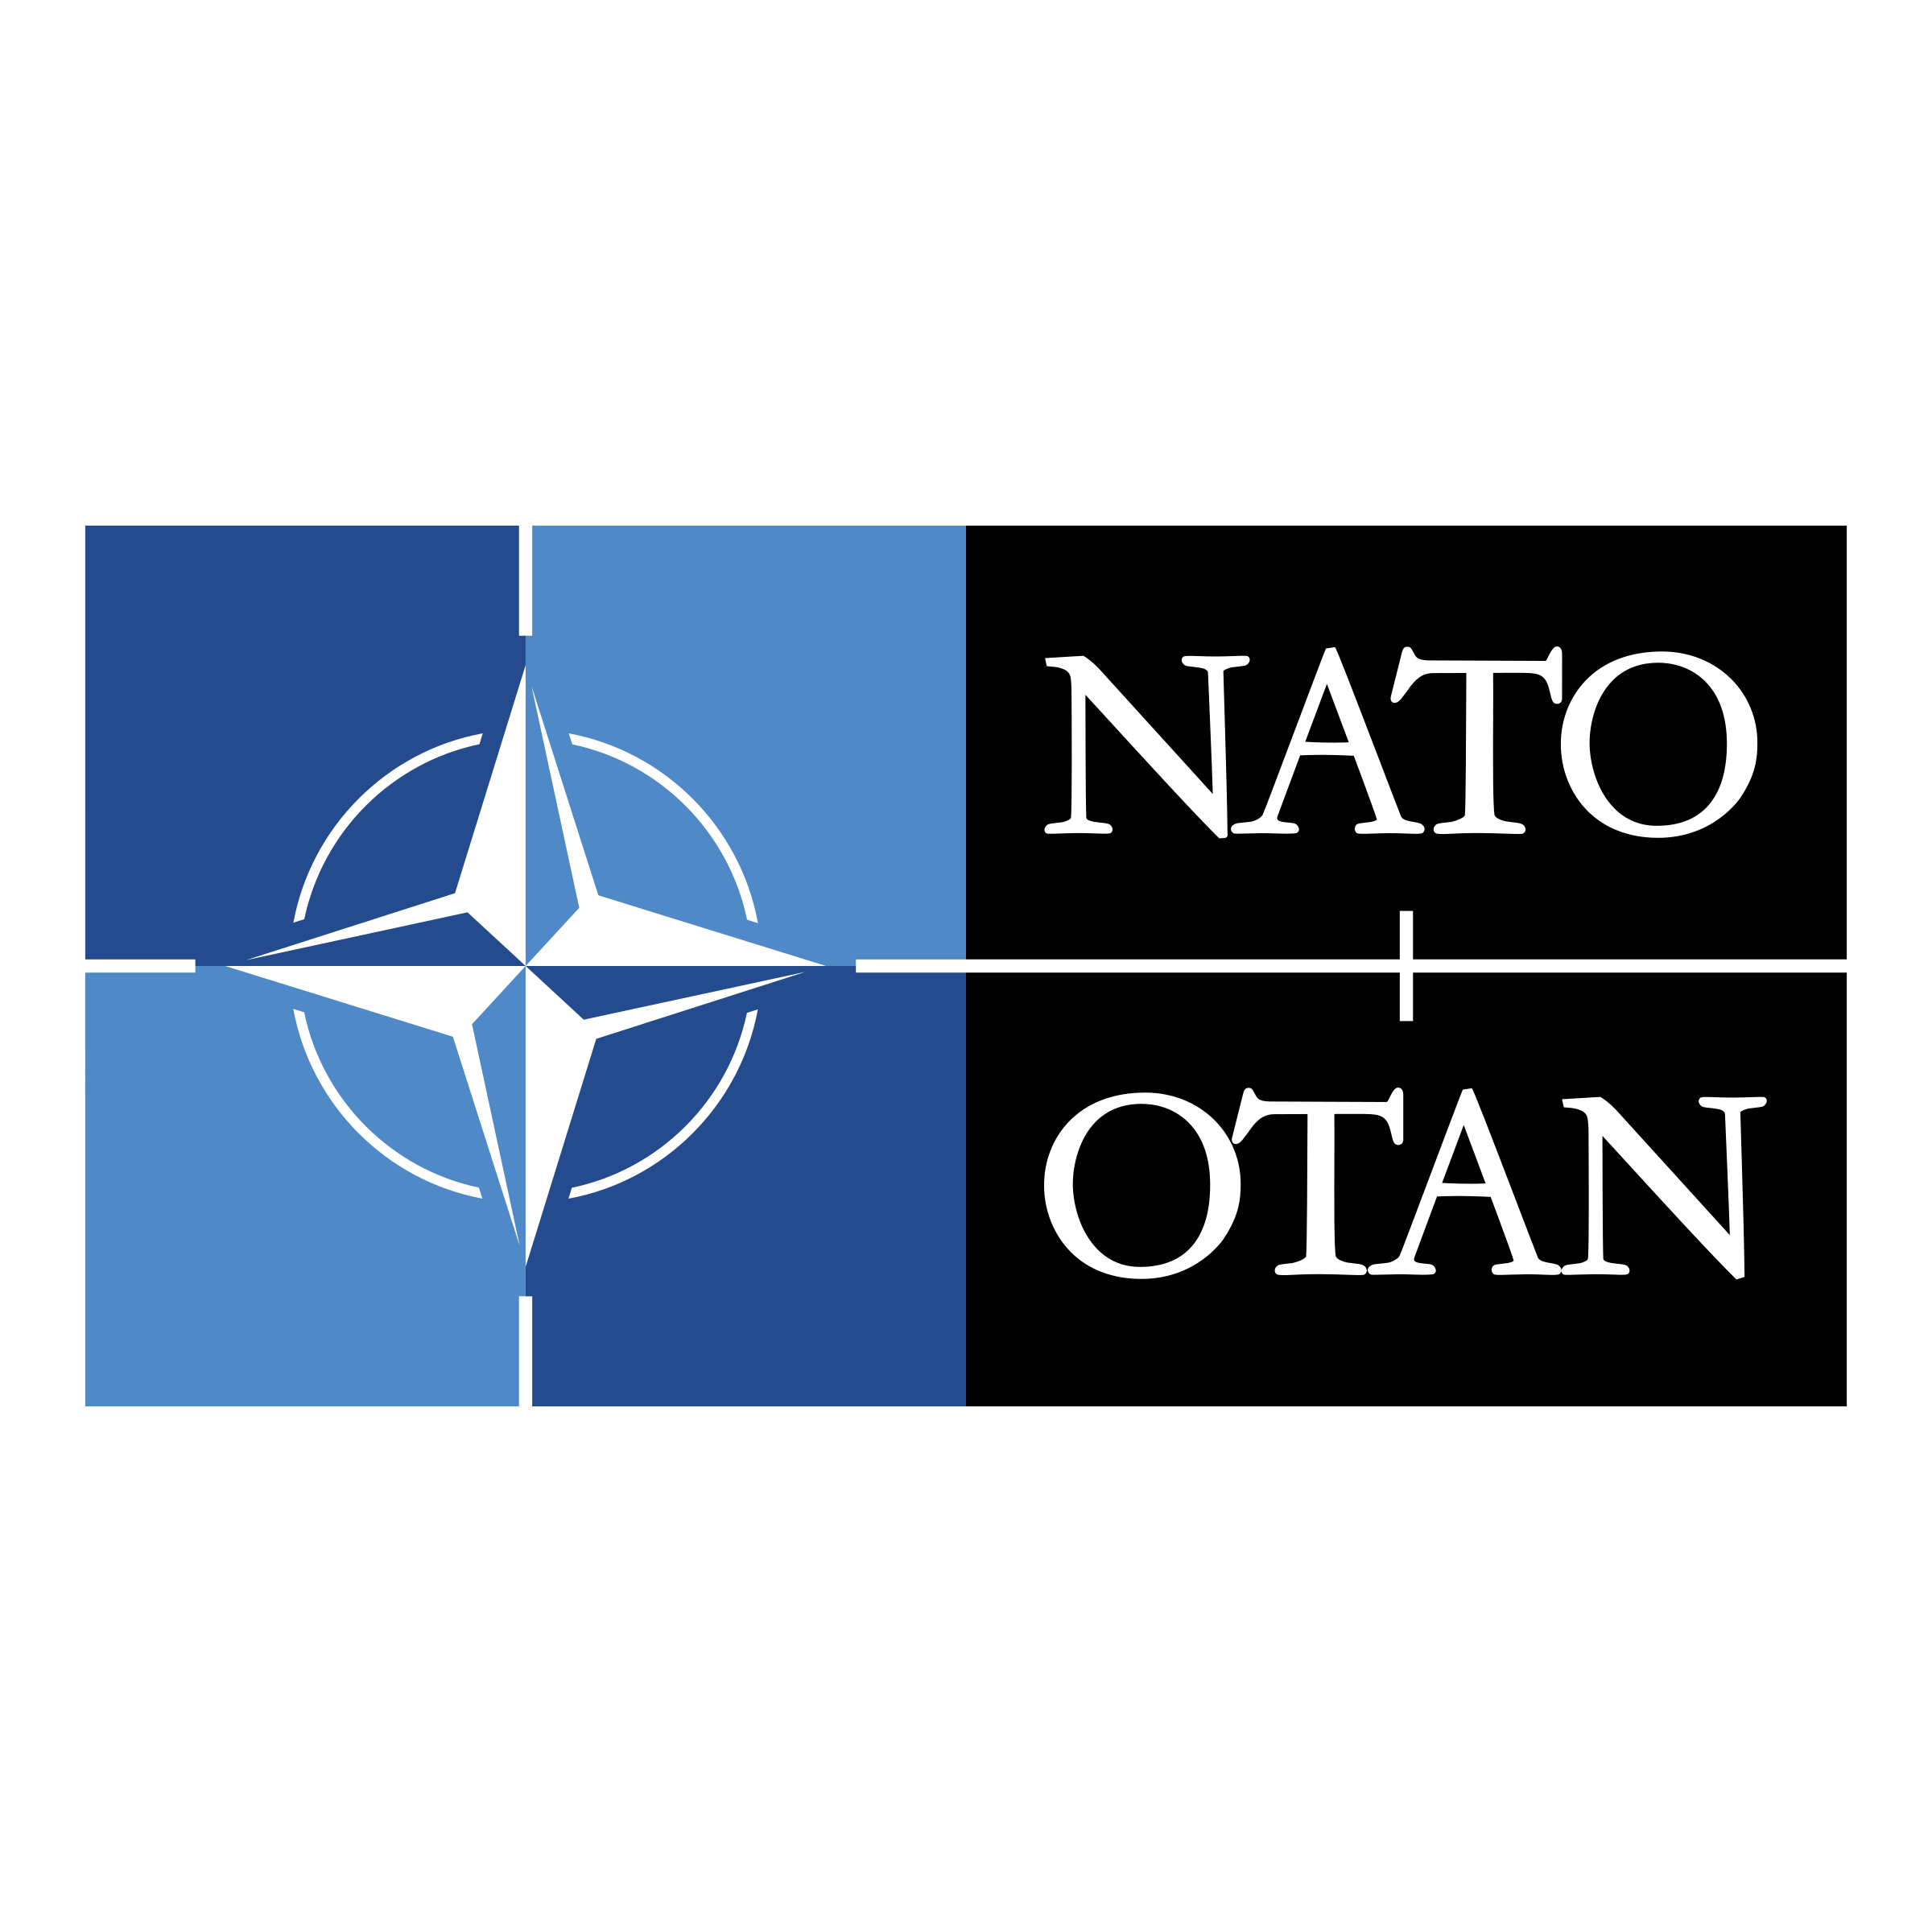 NATO লোগো PNG স্বচ্ছ এবং SVG ভেক্টর - ফ্রিবি সাপ্লাই